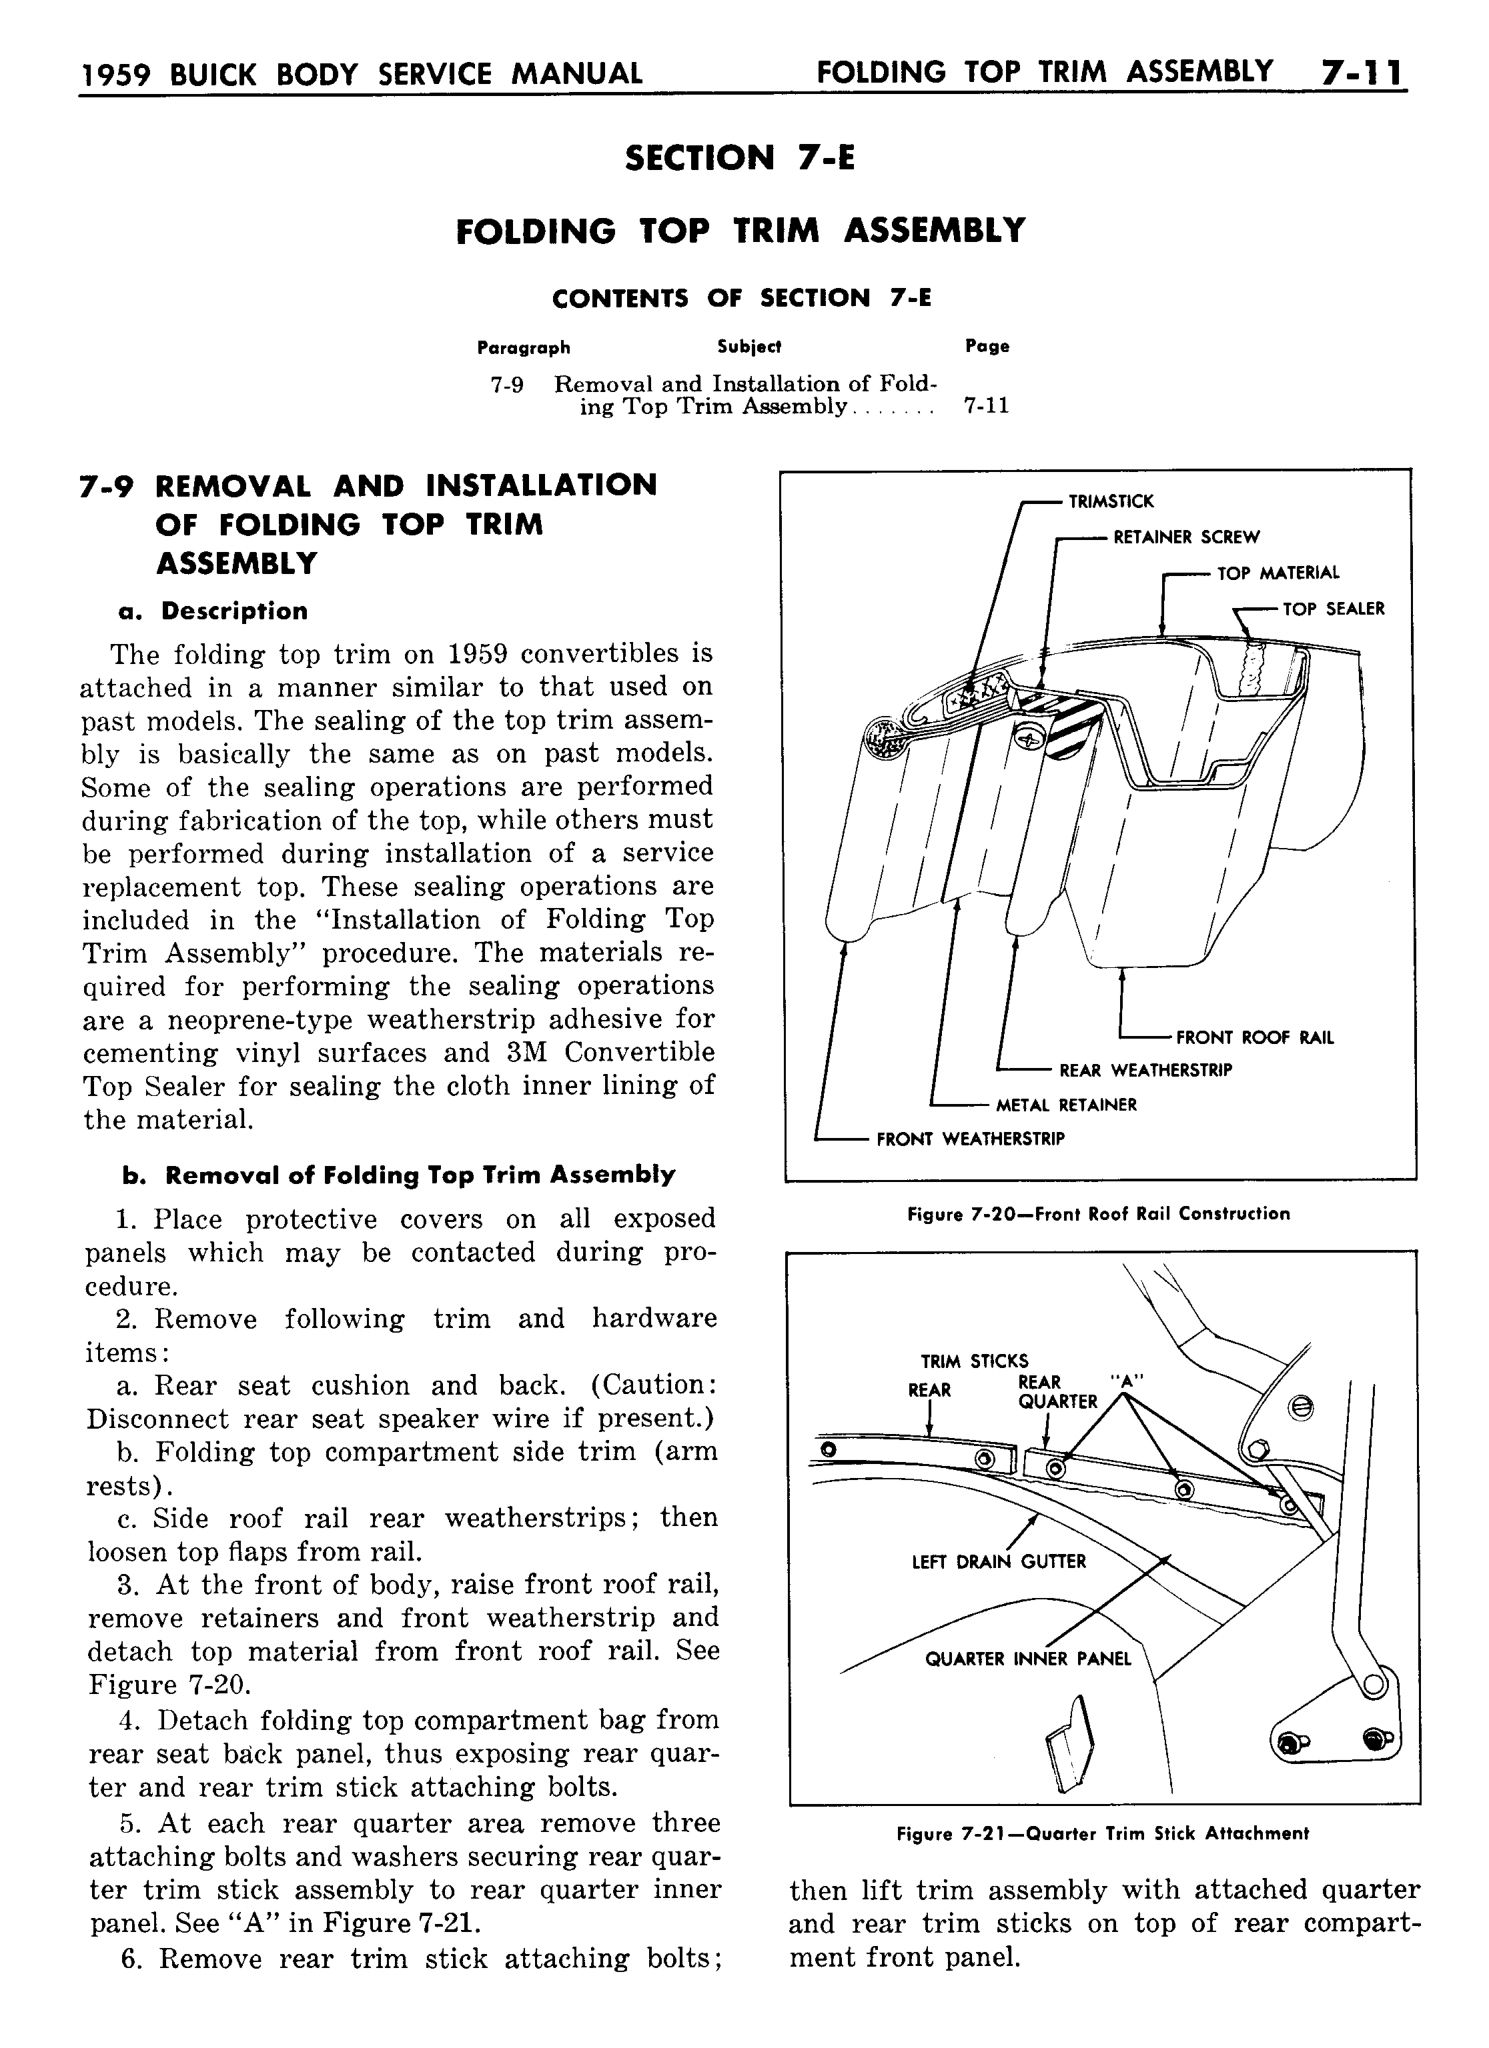 n_08 1959 Buick Body Service-Folding Top_11.jpg